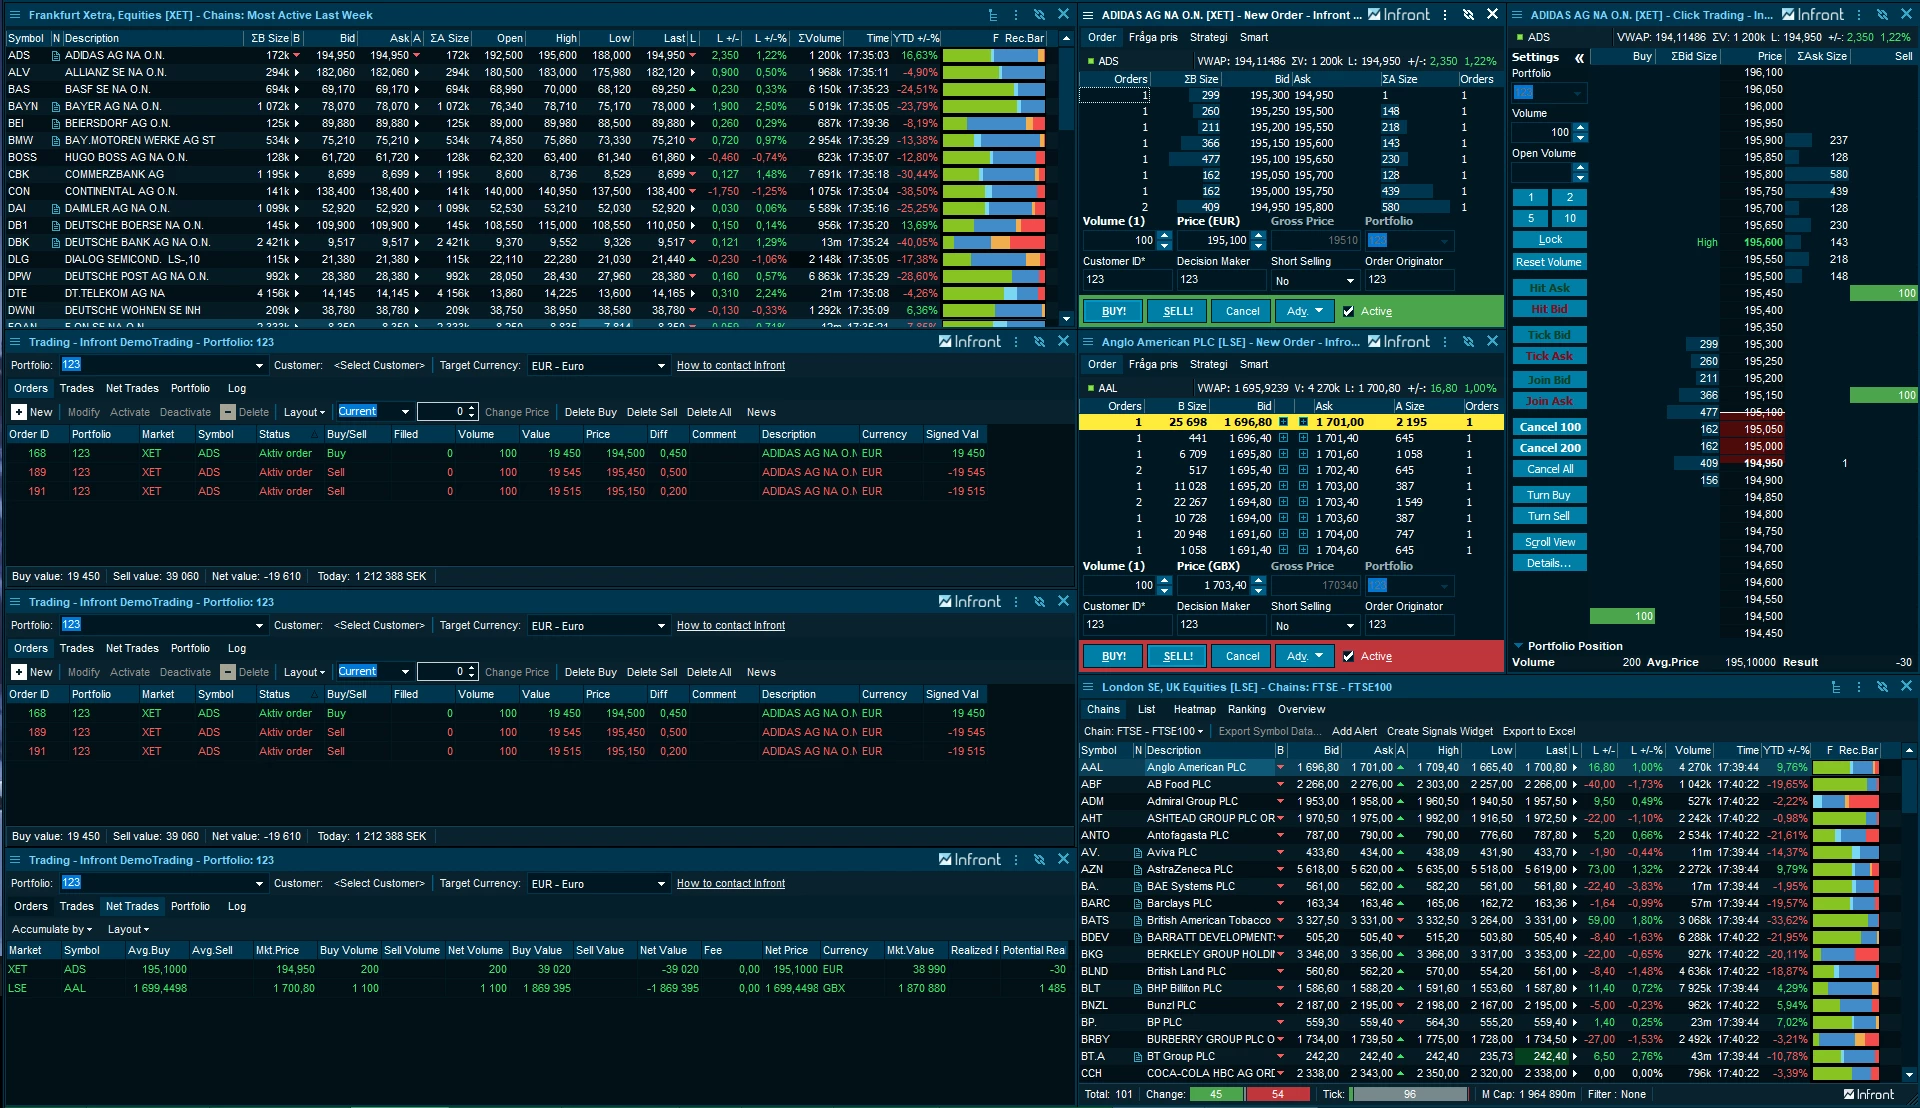 Trading Desktop